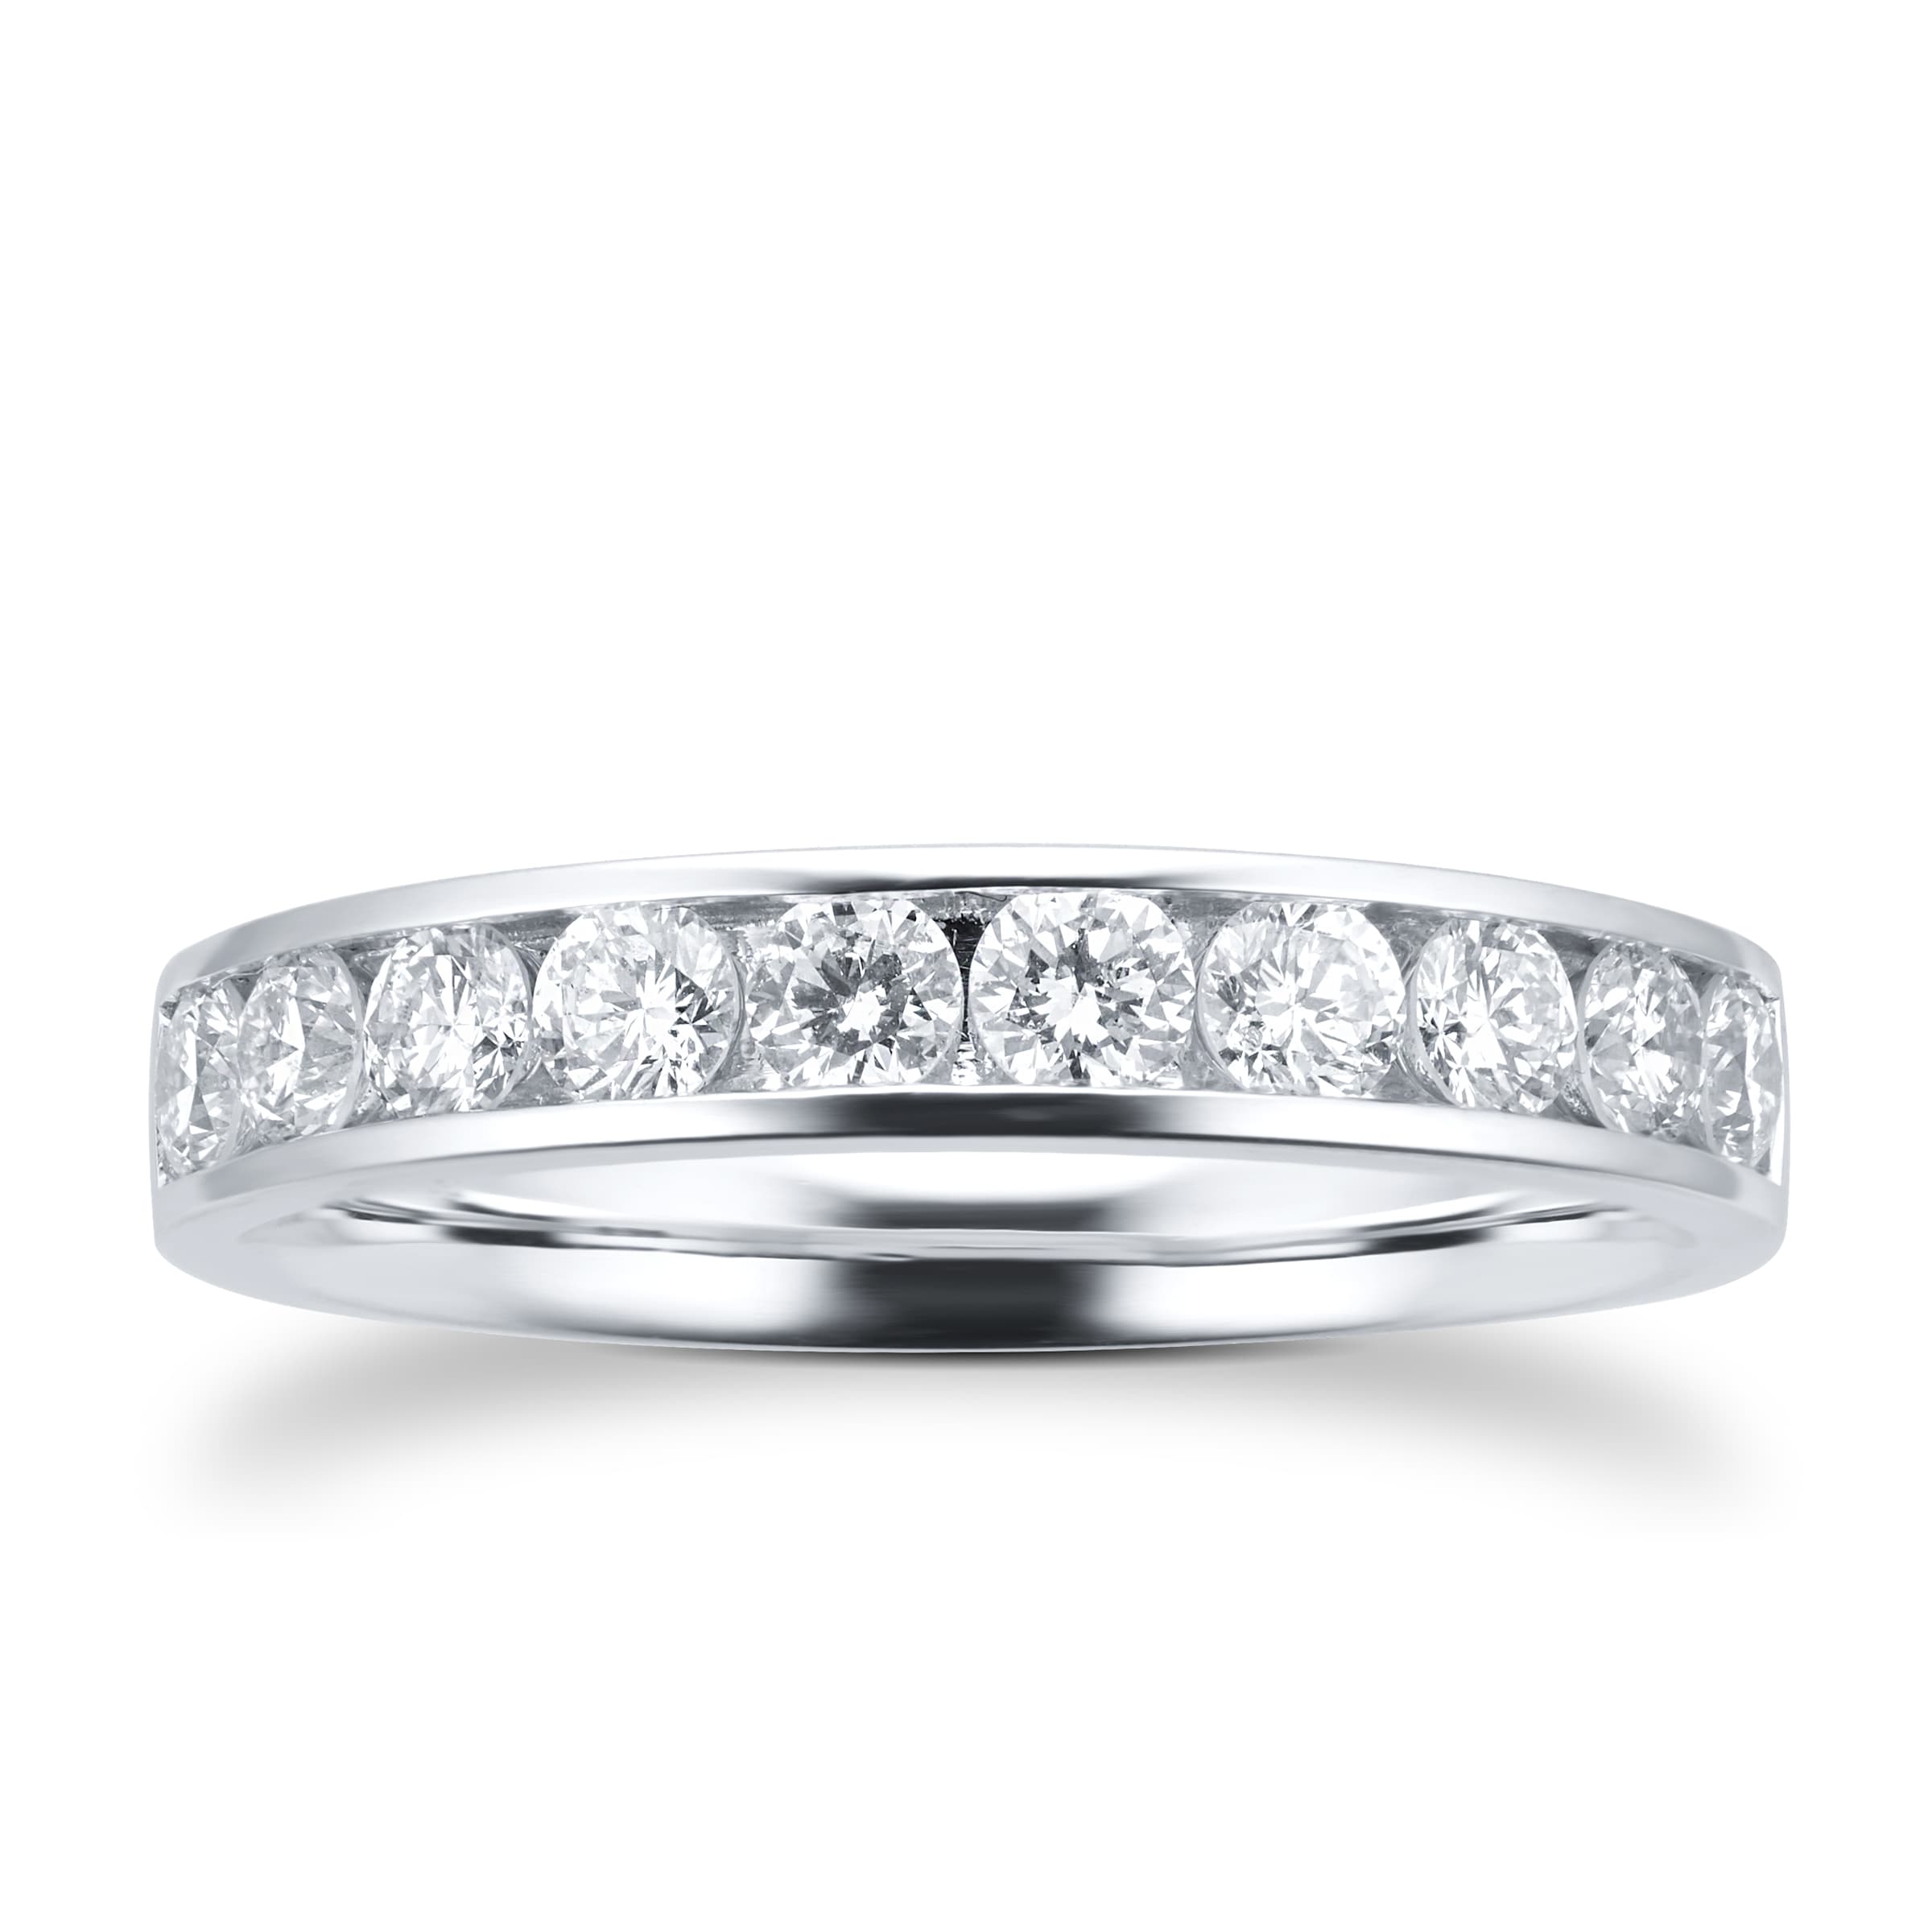 18ct White Gold 0.75ct Brilliant Cut Goldsmiths Brightest Diamond Eternity Ring - Ring Size Q